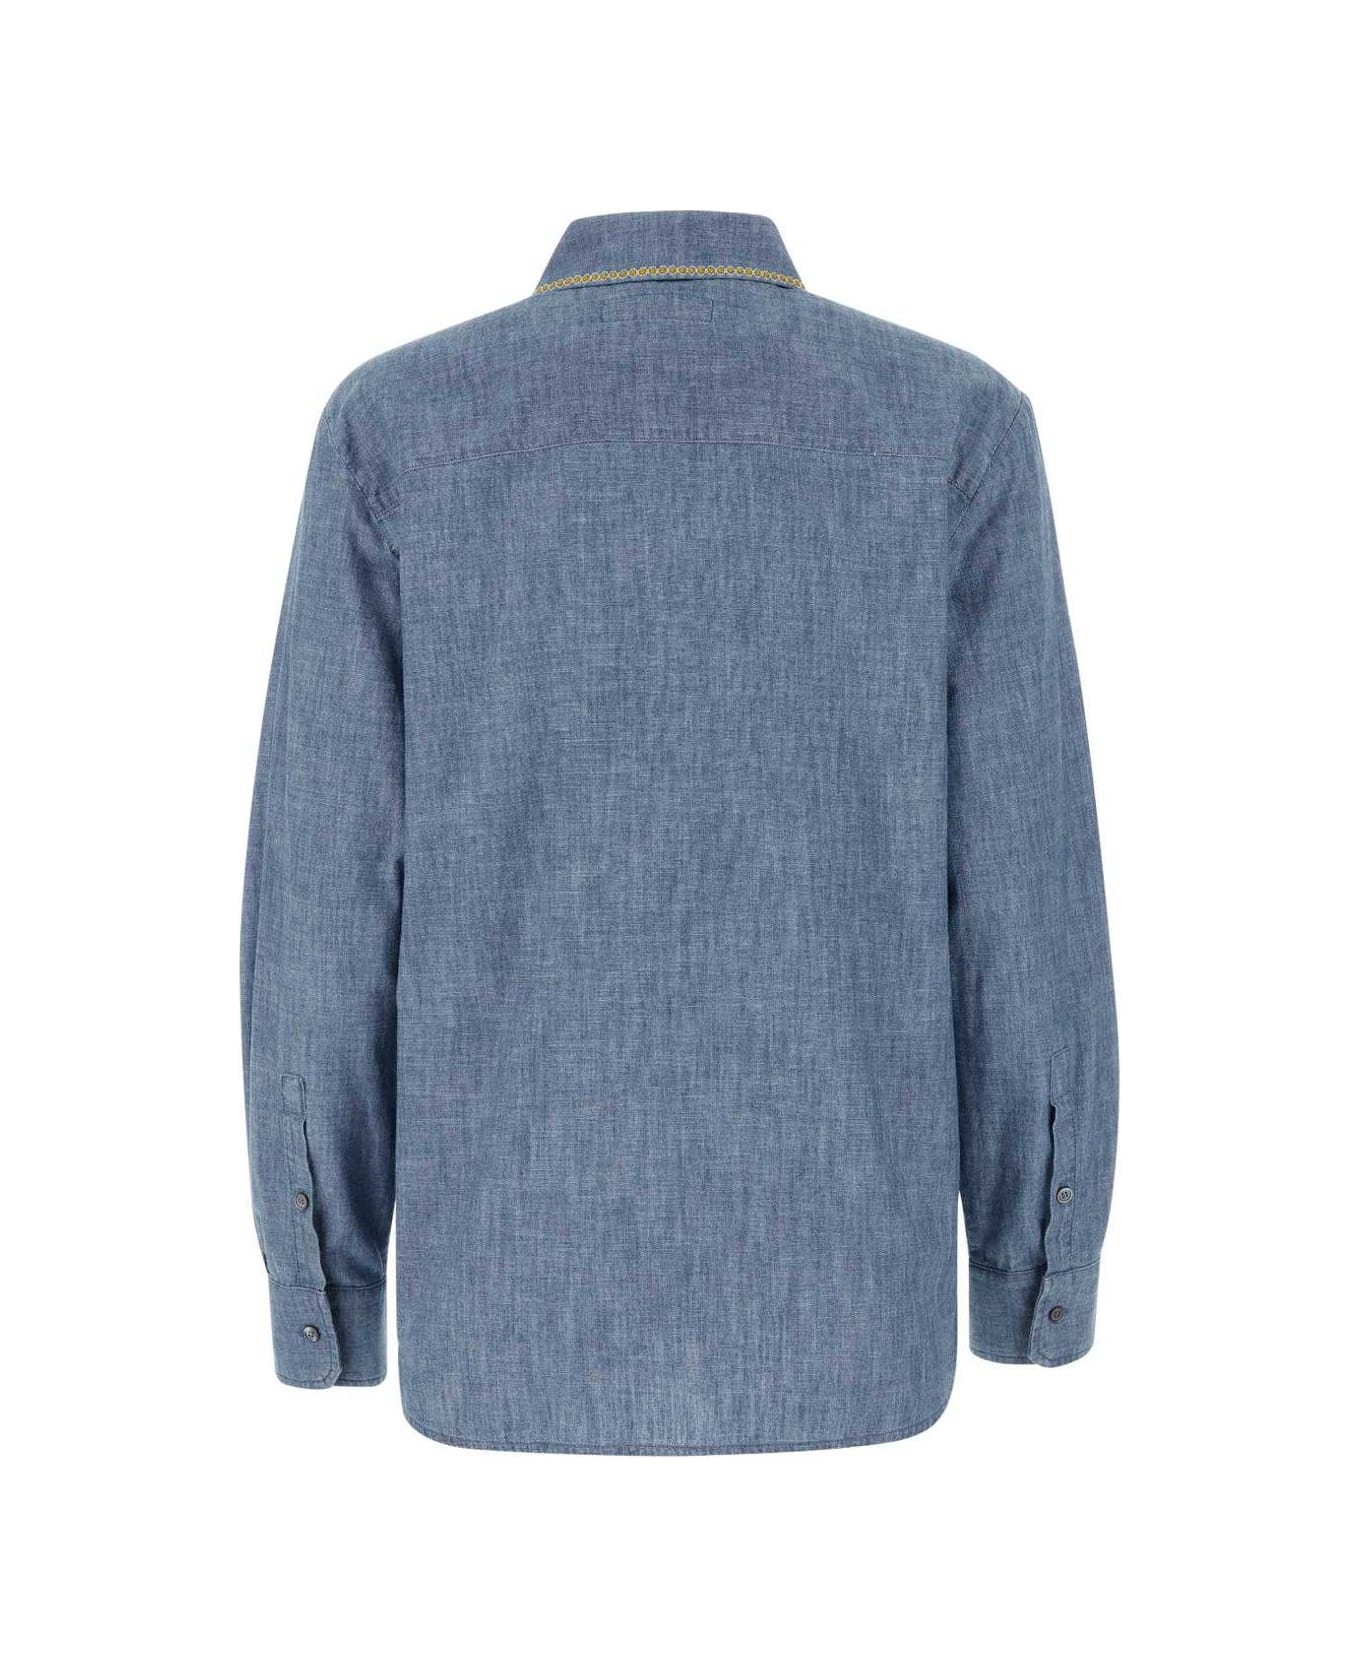 Weekend Max Mara Denim Udine Shirt - Blu シャツ